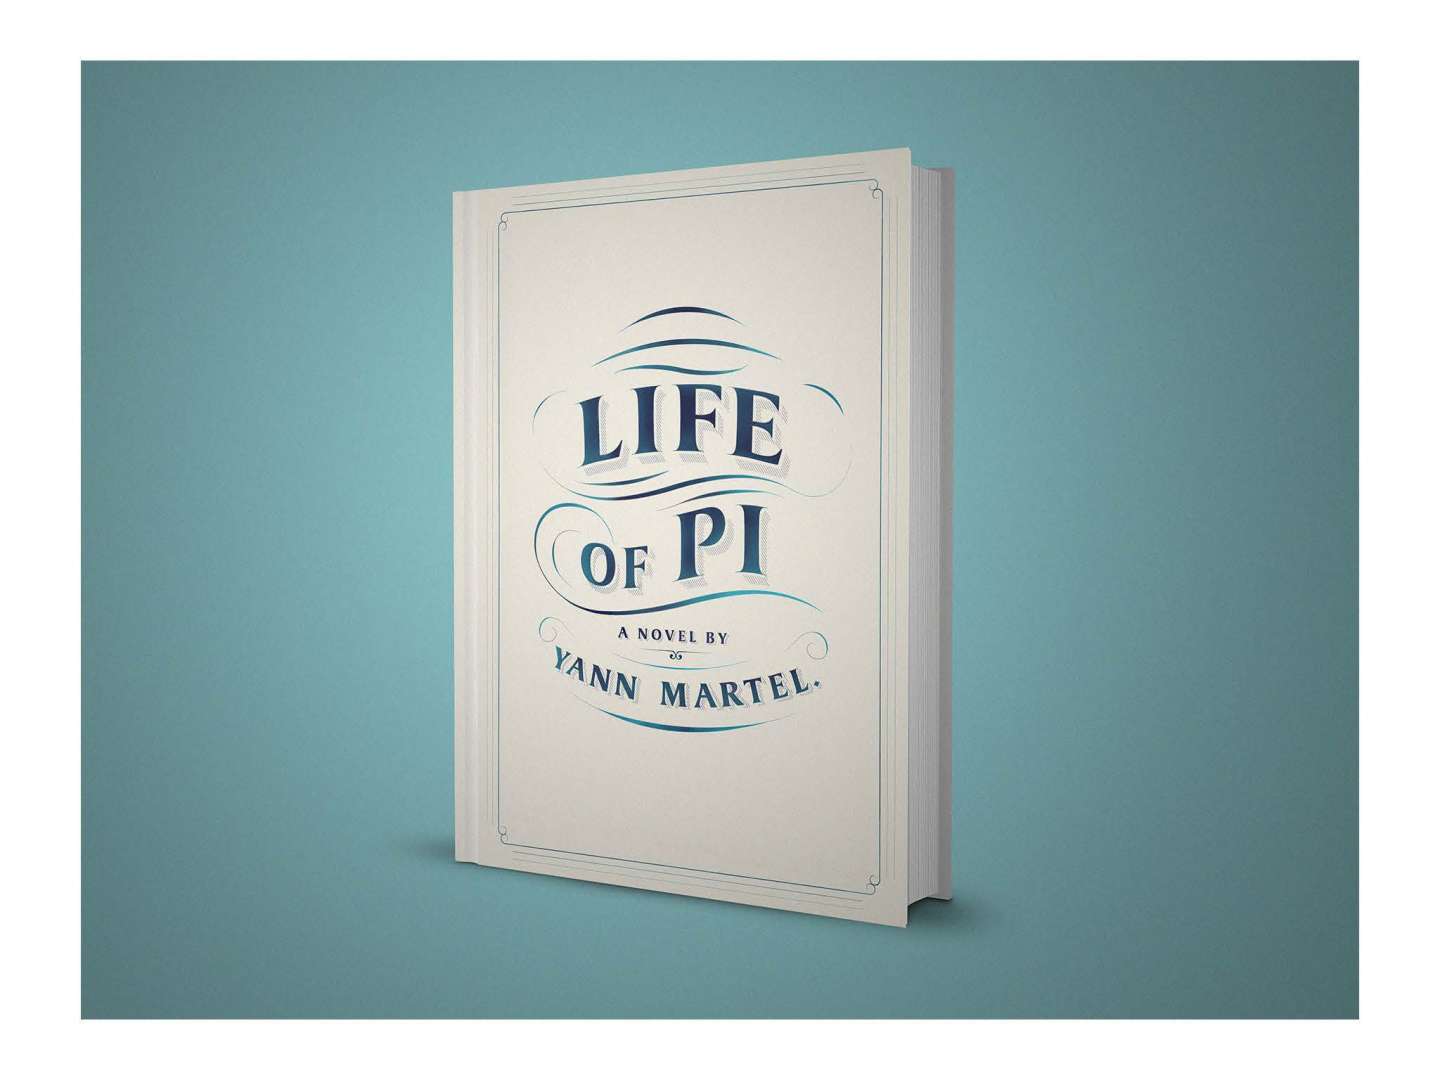 Life of pi - Book Cover